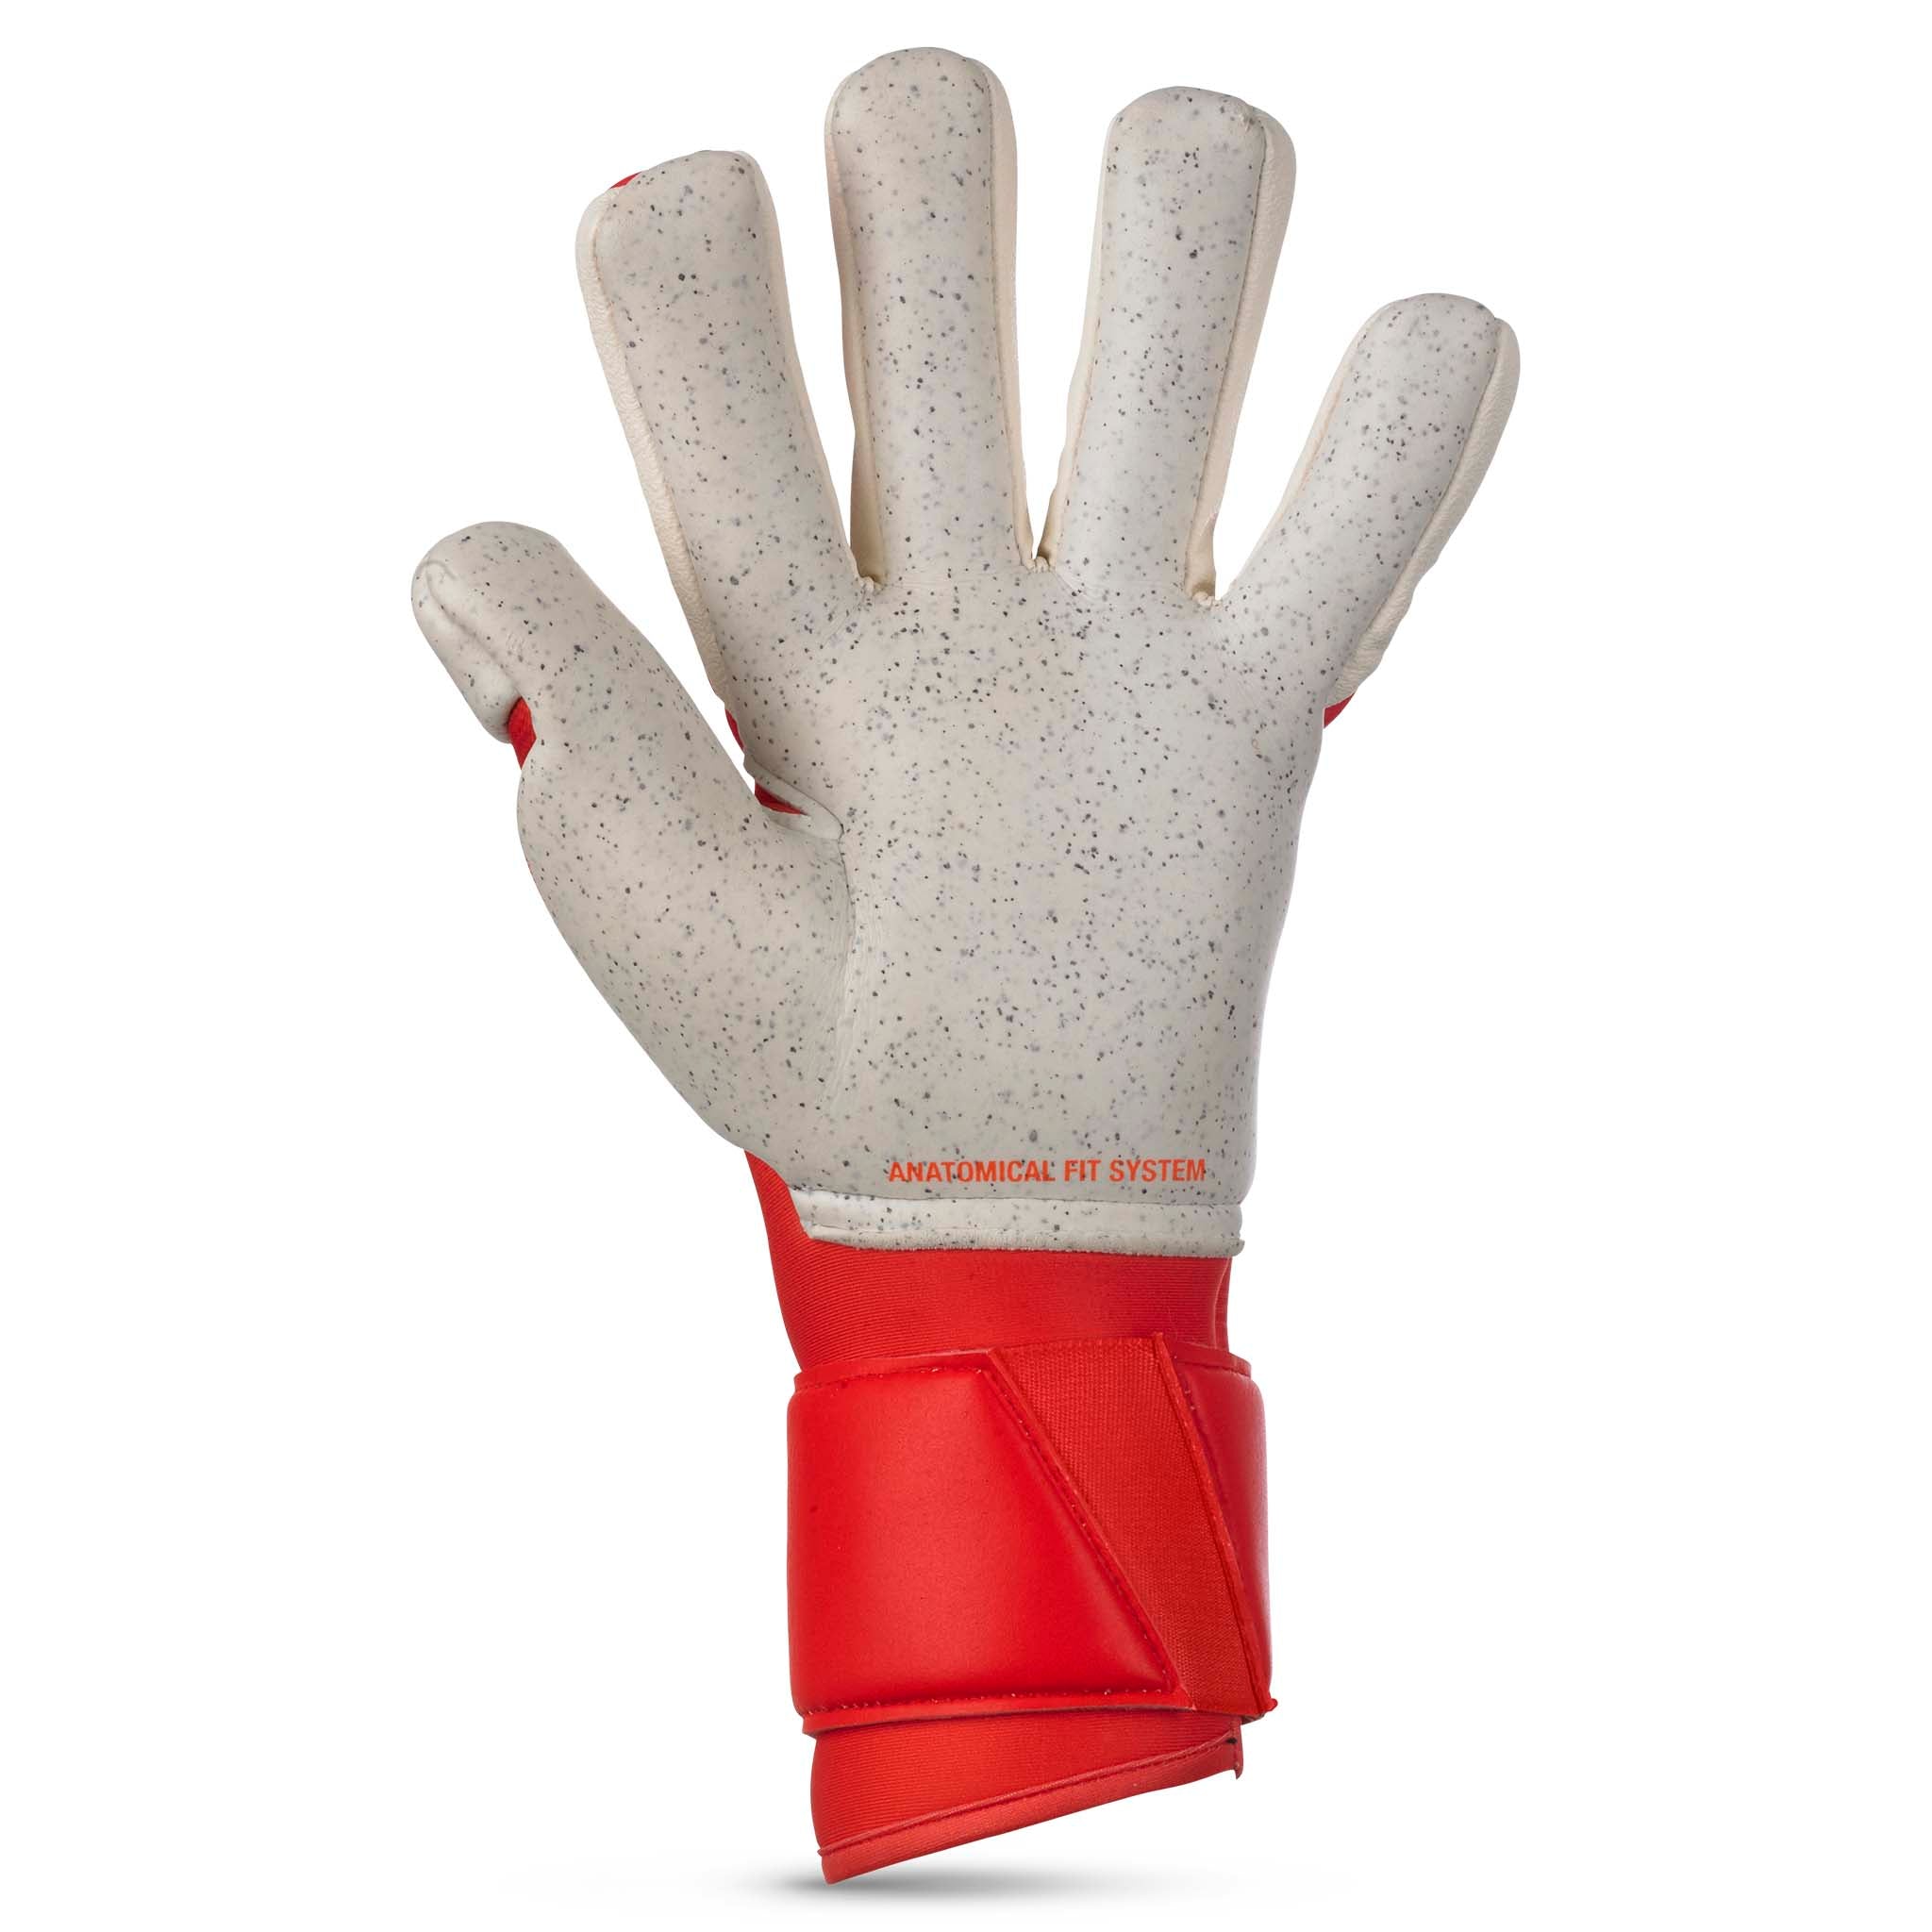 Goalkeeper gloves - 88 Pro Grip #colour_red/white